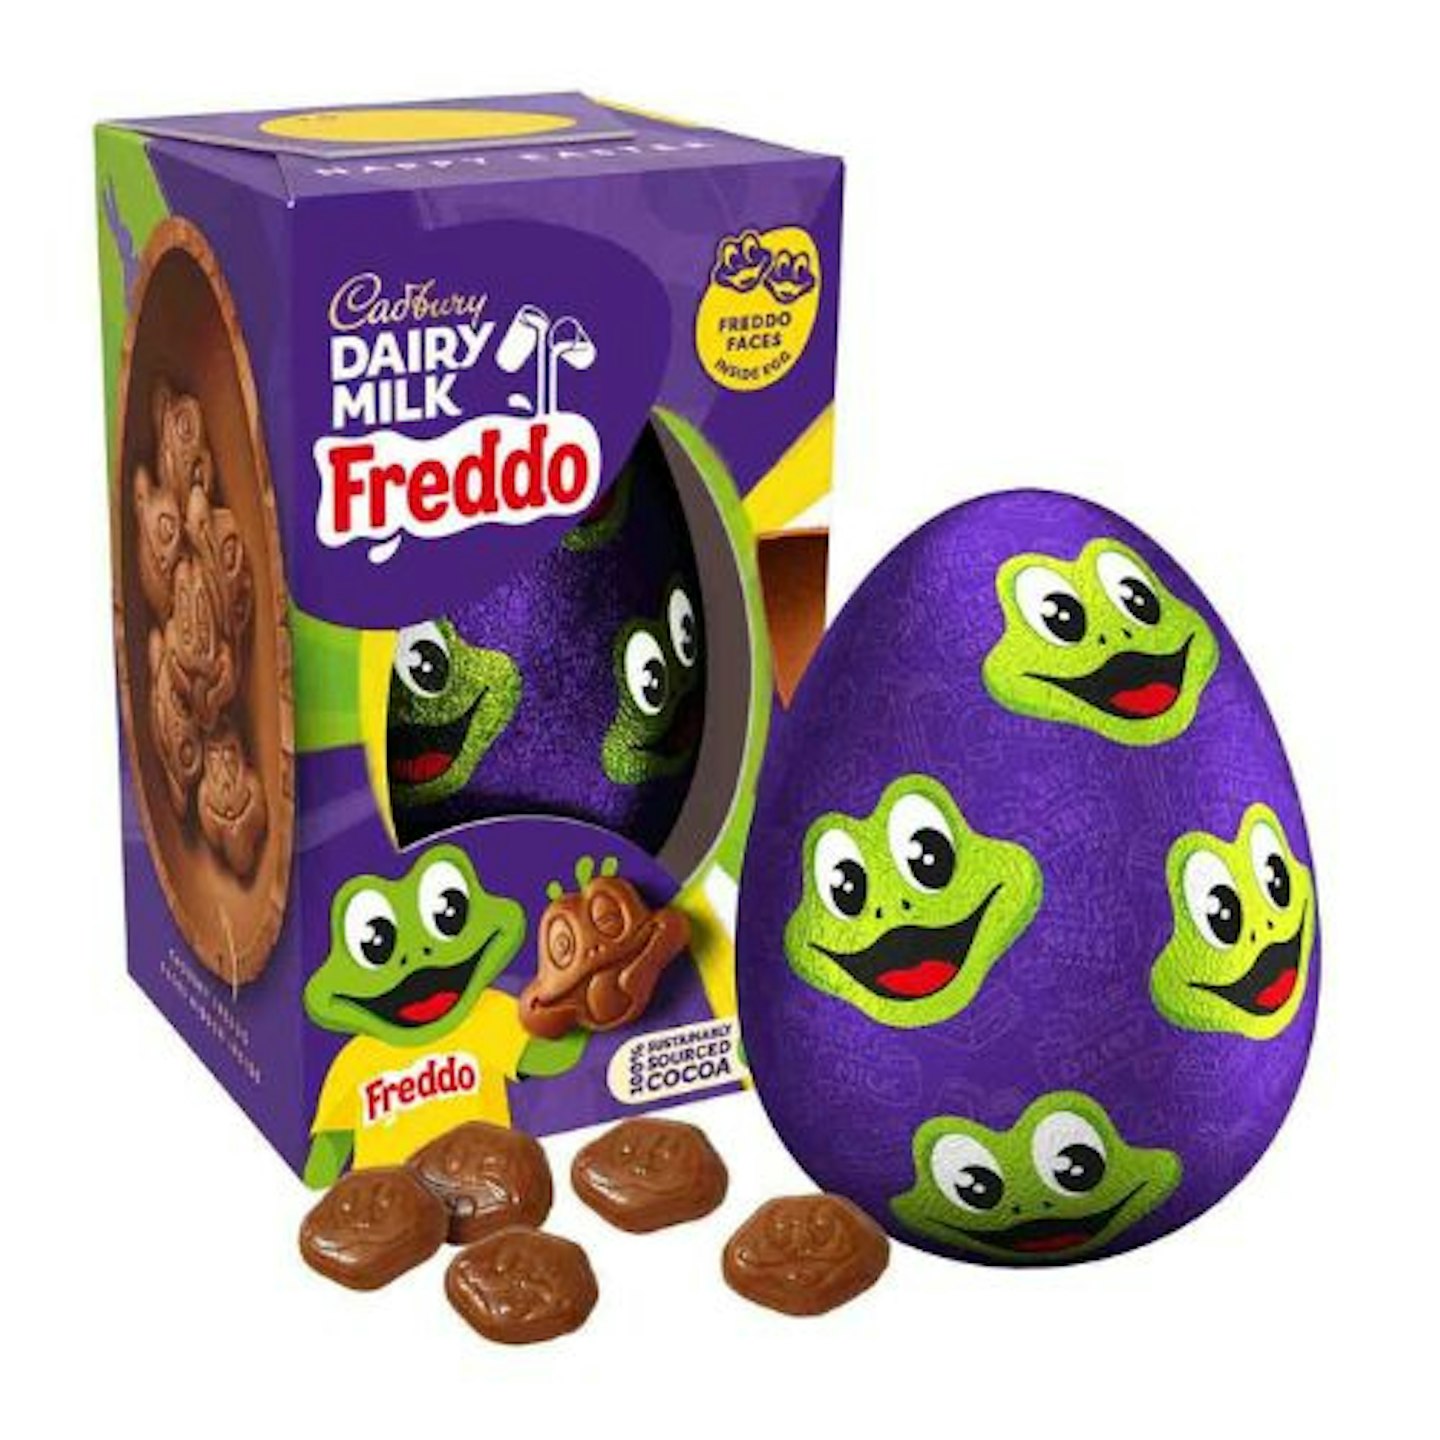 Cadbury Dairy Milk Freddo Faces Easter Egg